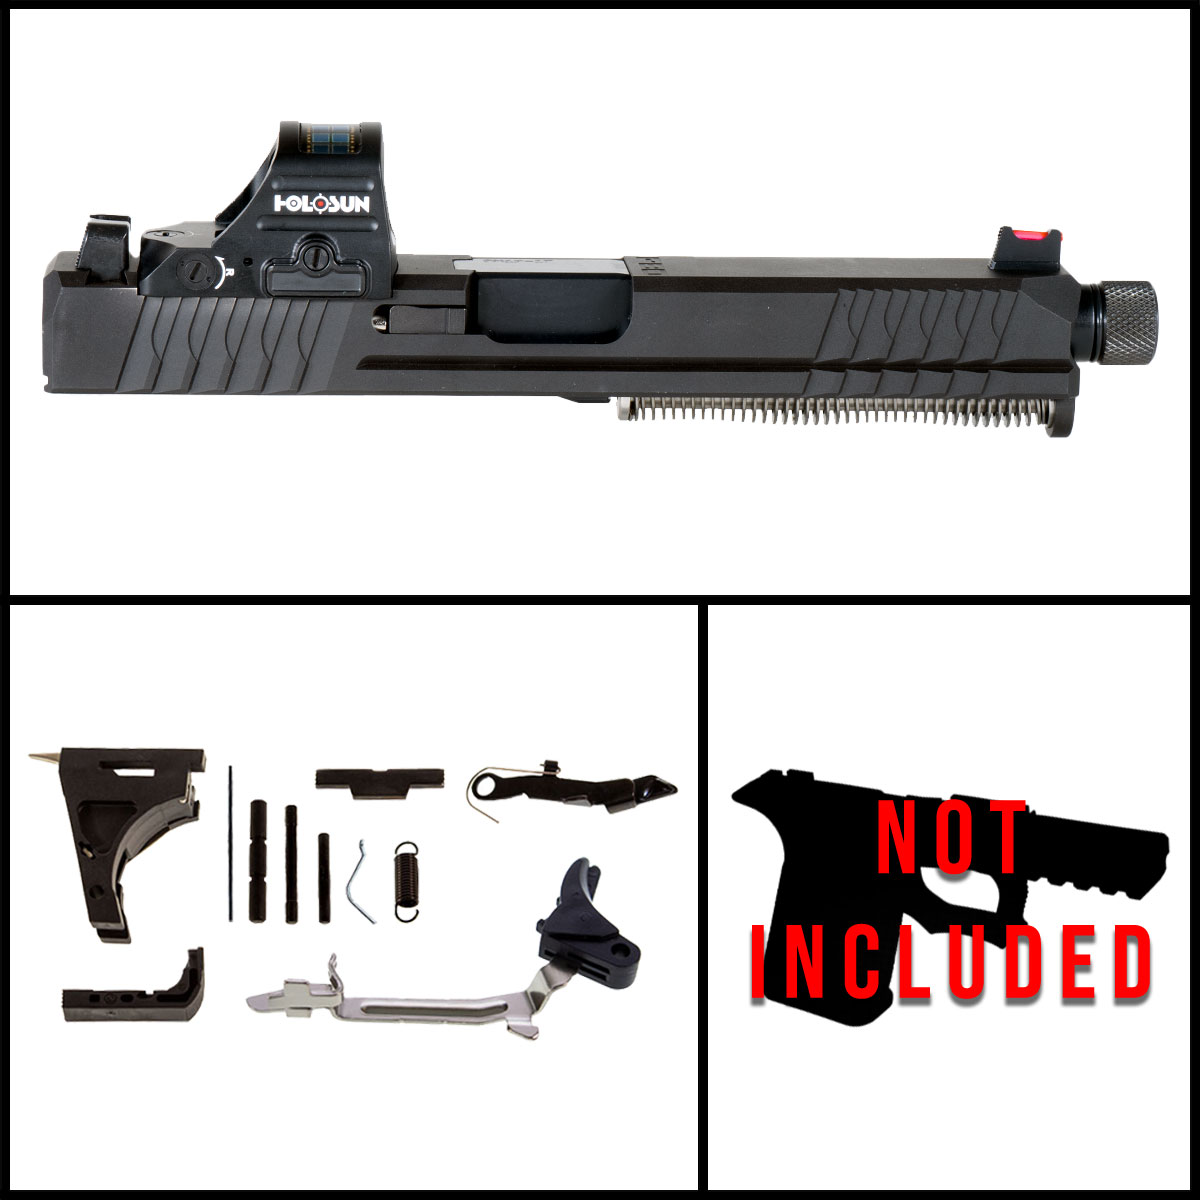 DDS 'Heartstone' 9mm Full Gun Kit (Everything minus Frame) - Glock 17 Gen 1-3 Compatible